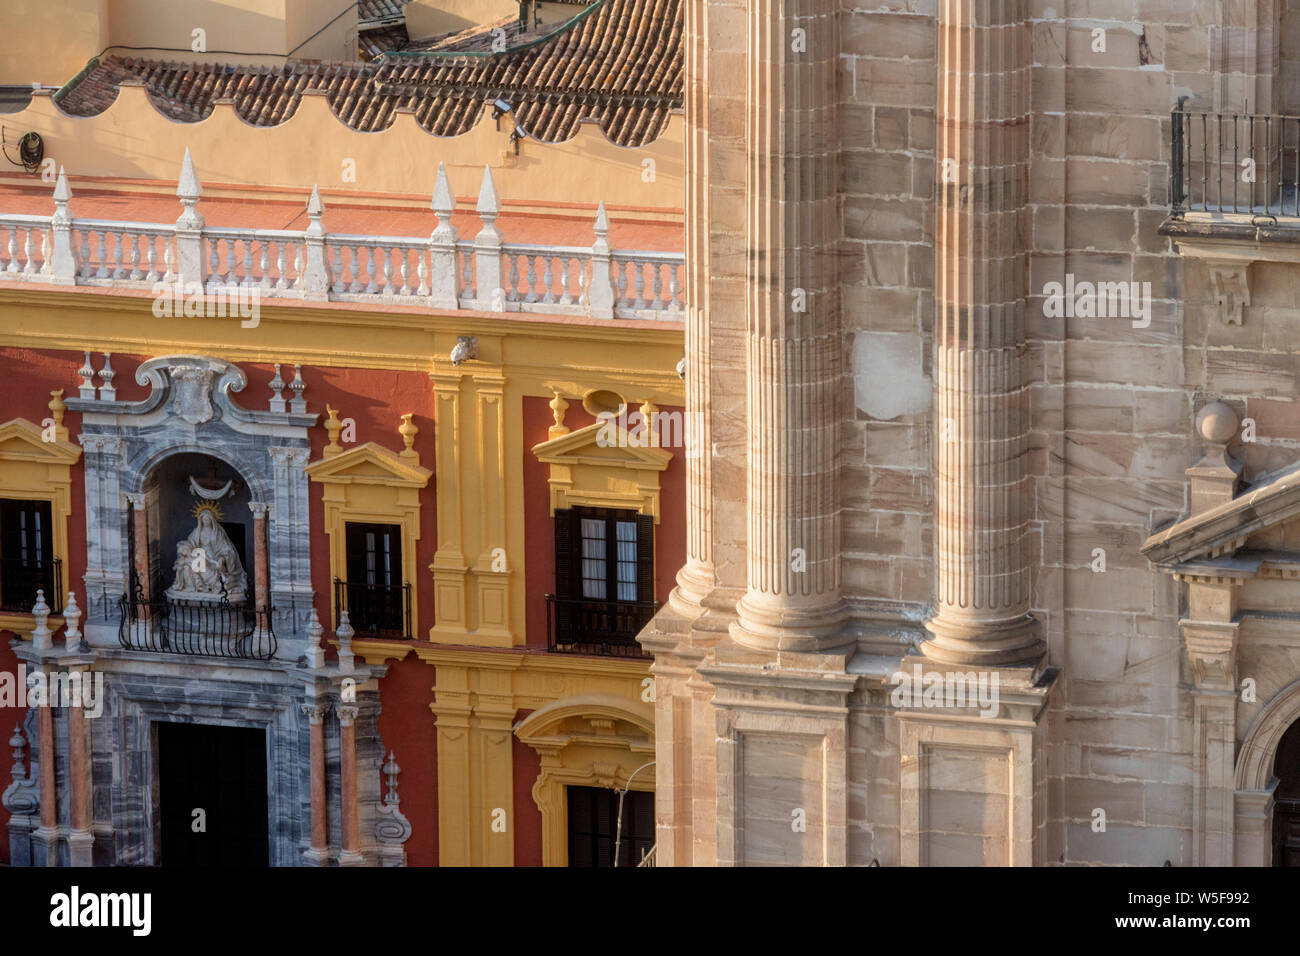 Episcopal Palace in Plaza del Obispo - one of most important late baroque architecture in Malaga, Spain Stock Photo